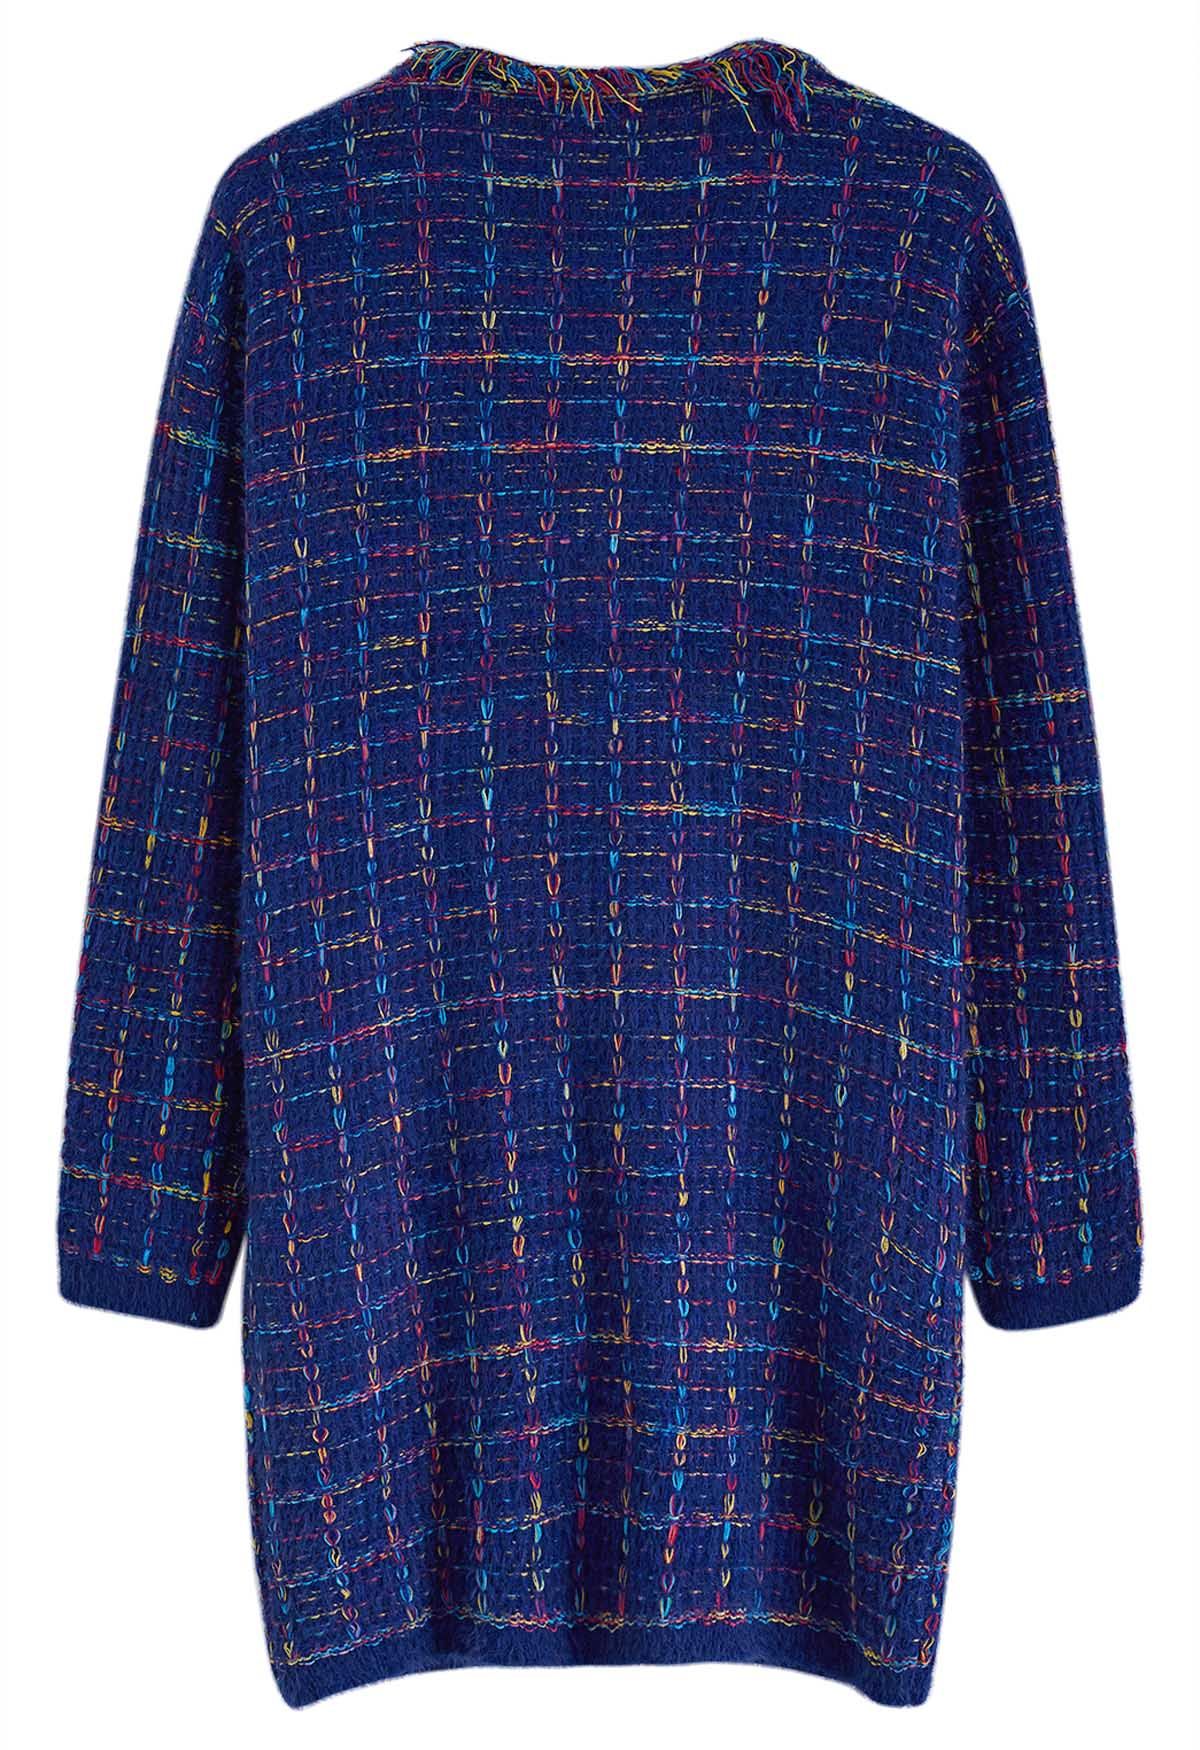 Multicolored Grid Pattern Longline Knit Cardigan in Indigo